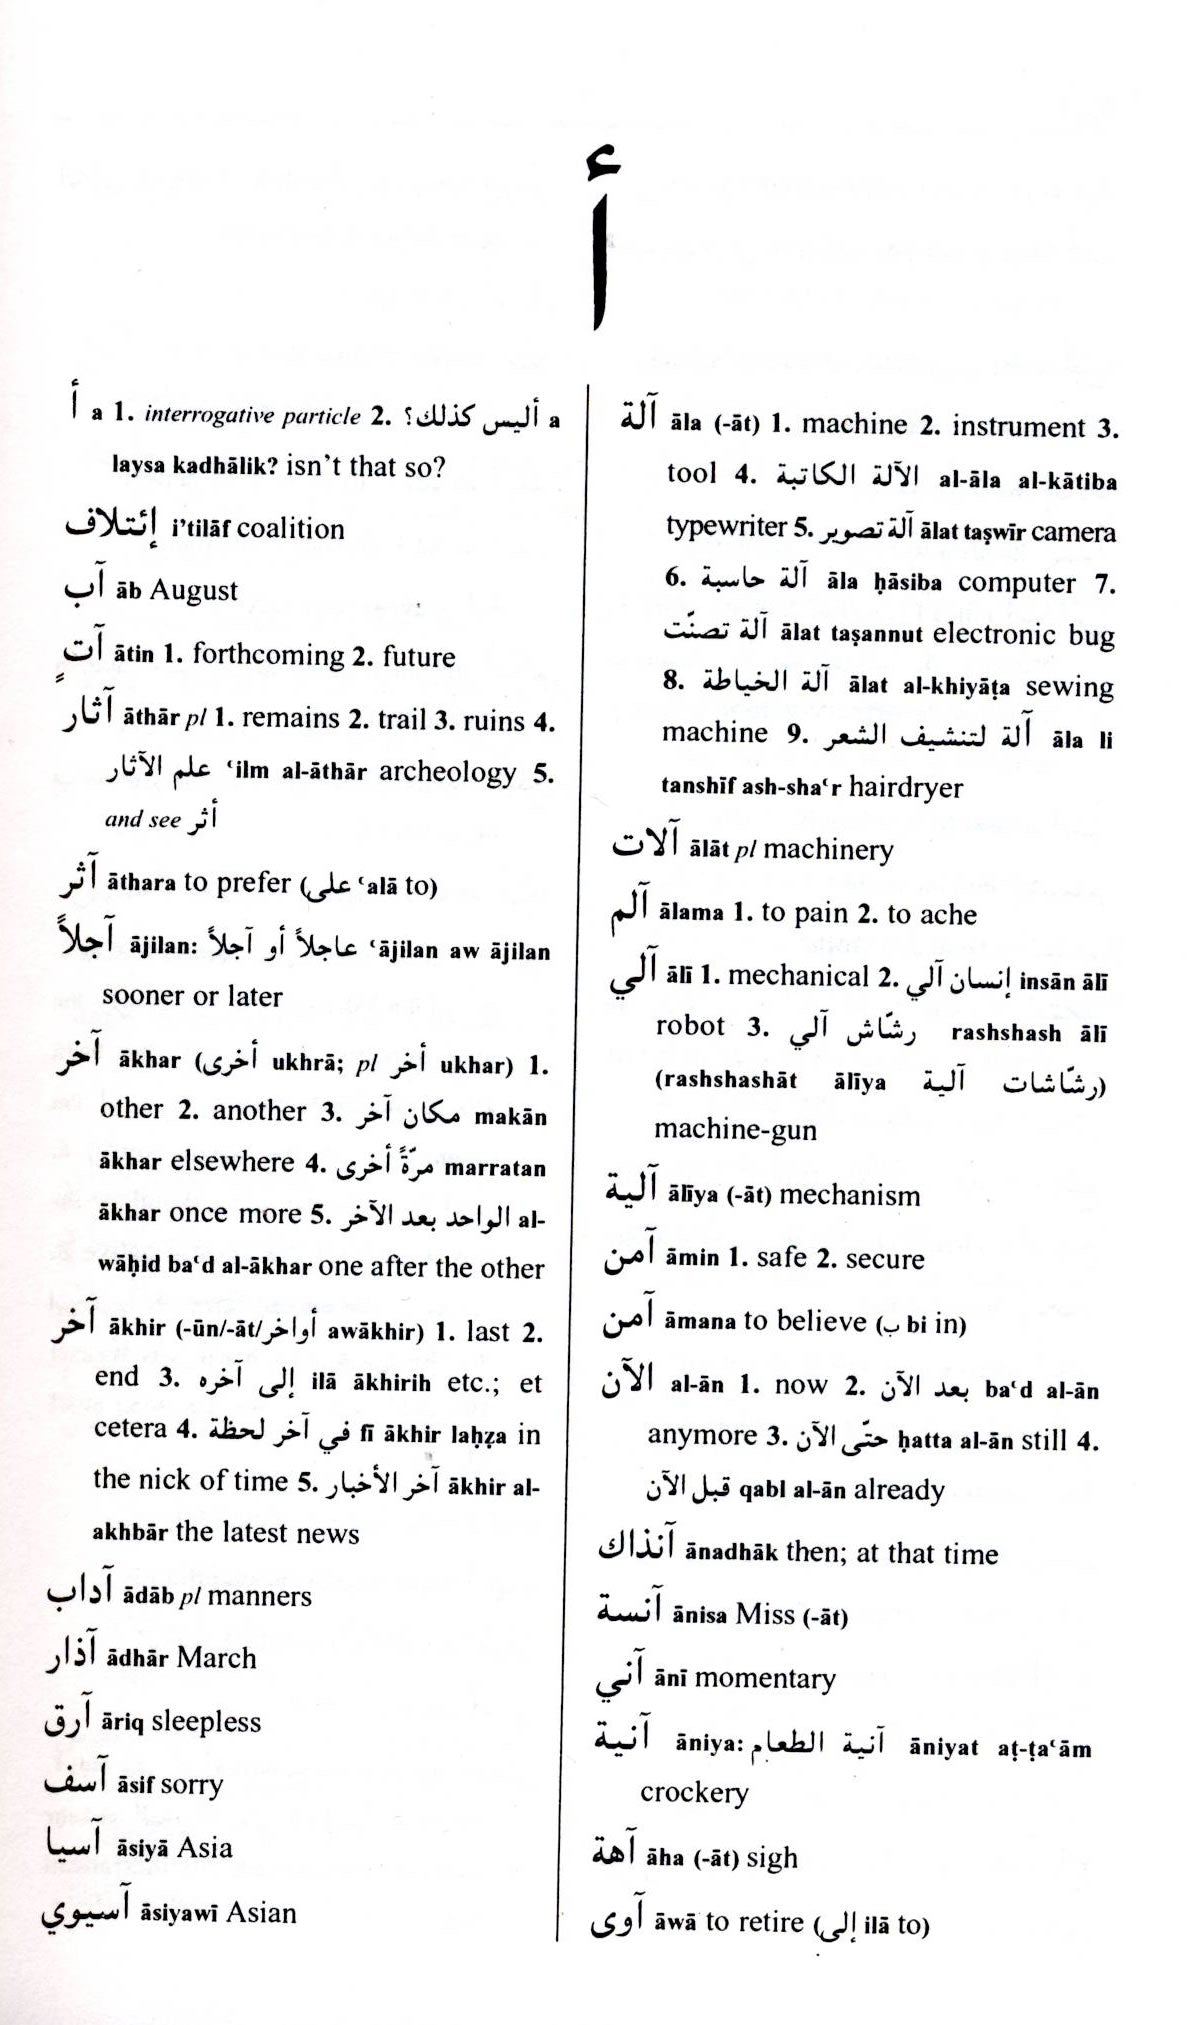 Arabic-English / English-Arabic Hipp Practical Dictionary